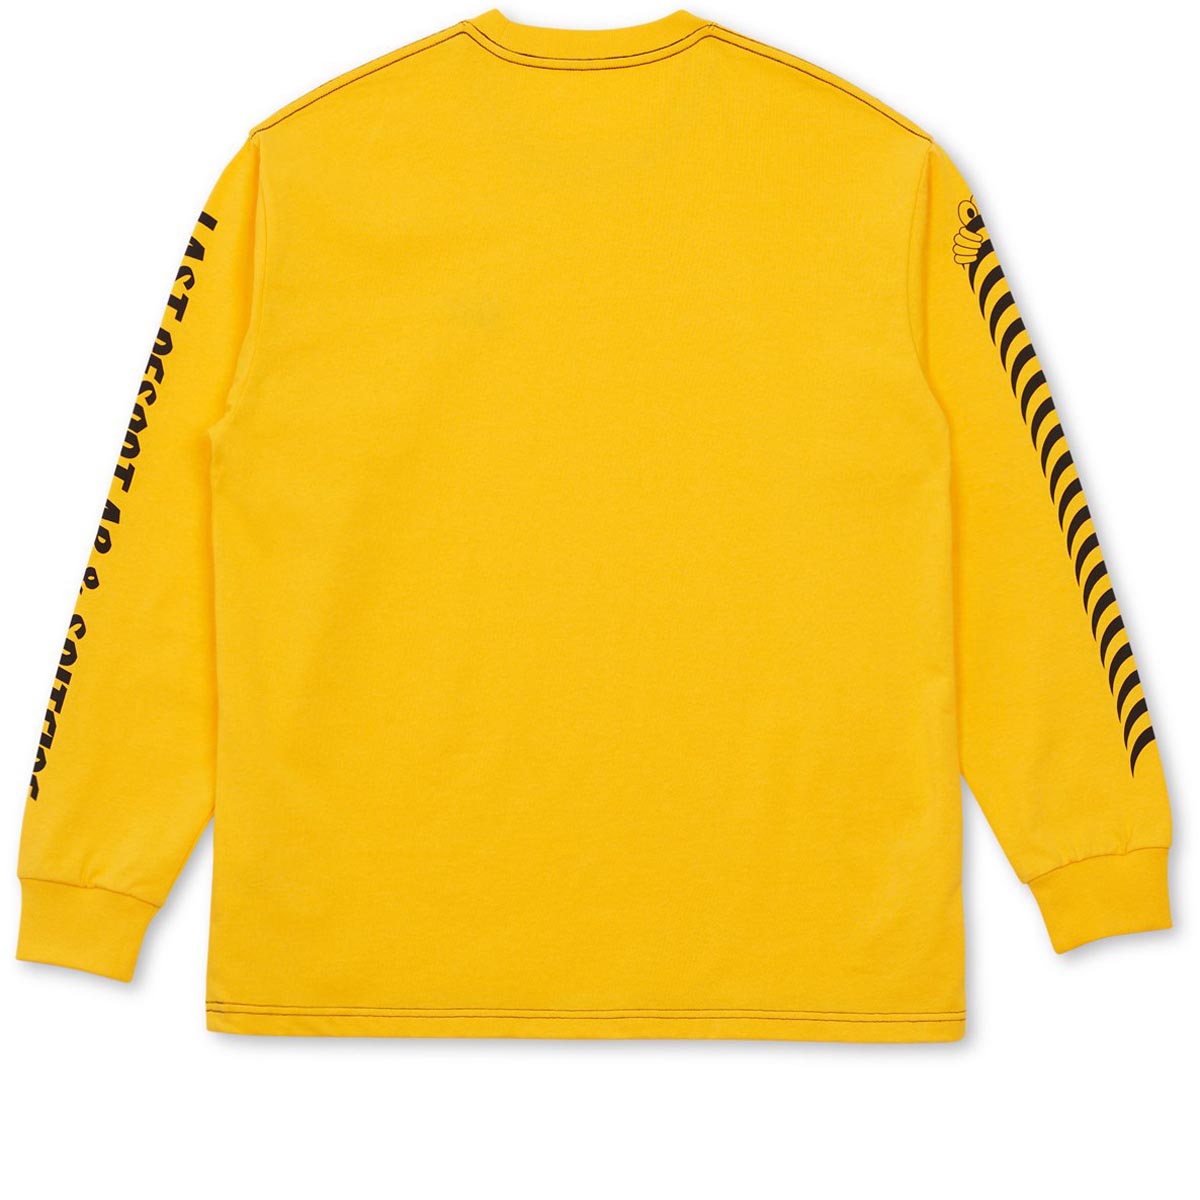 Last Resort AB x Spitfire Long Sleeve T-Shirt - Yellow image 2